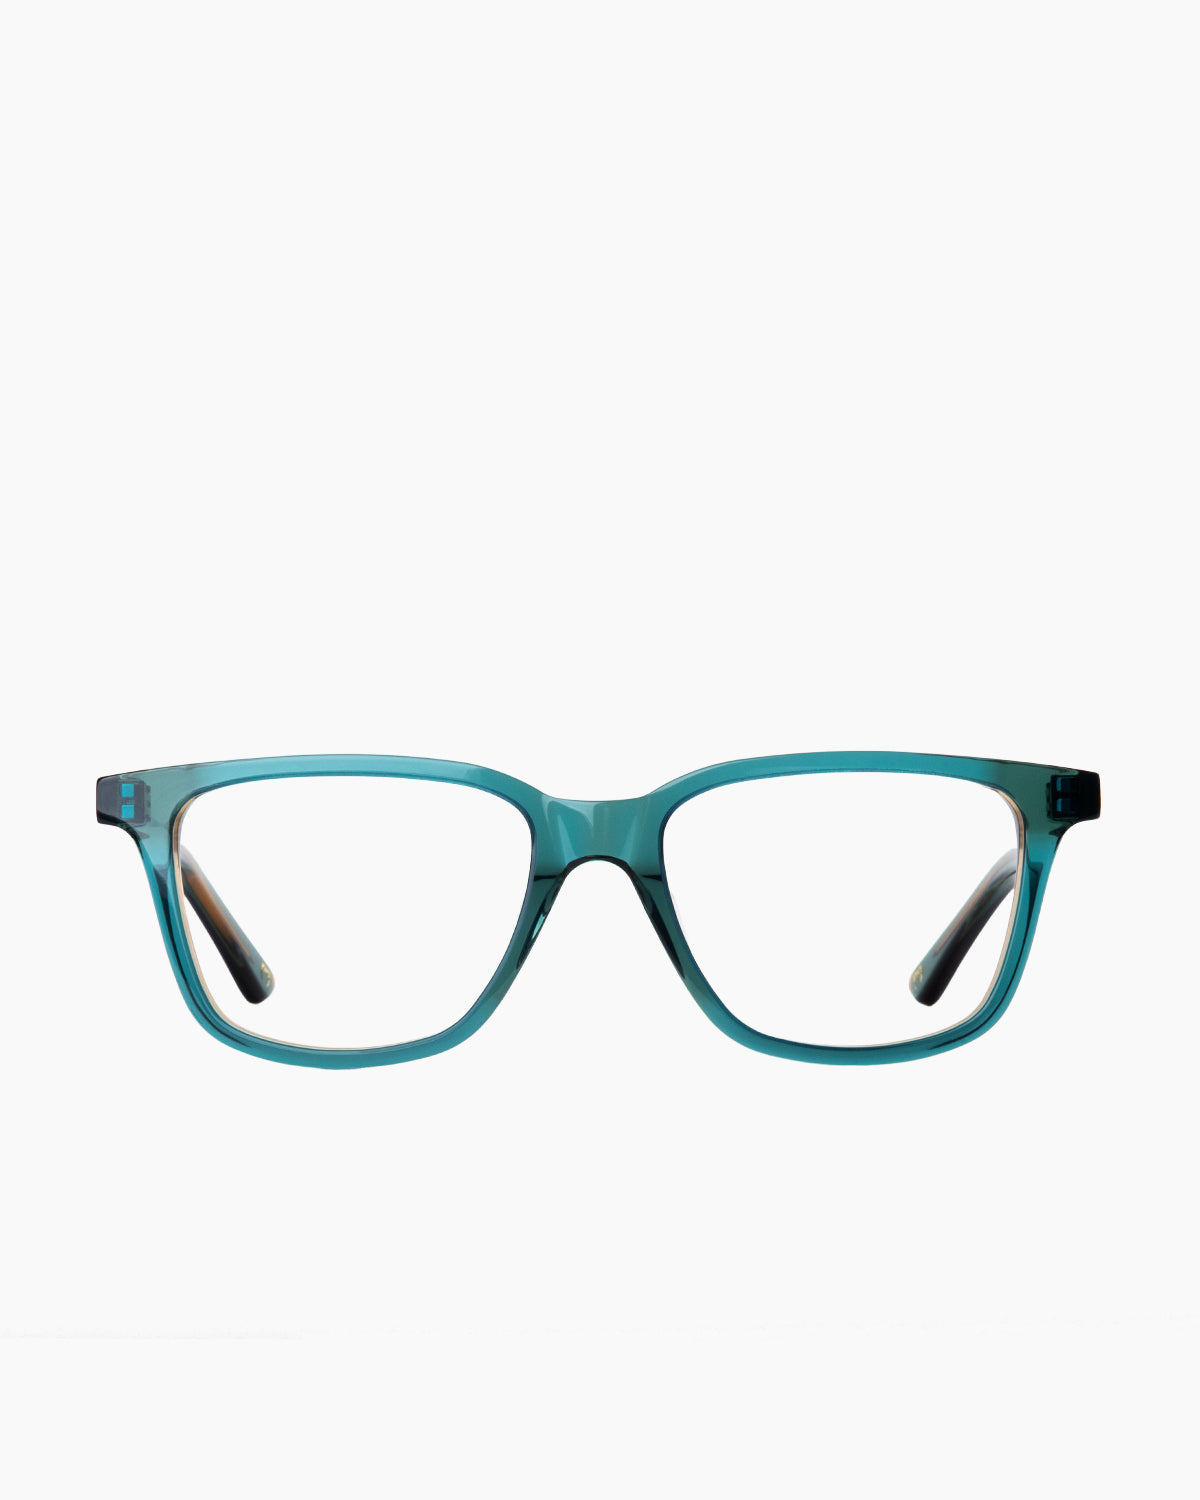 Spectacleeyeworks - Ilan - c736 | Bar à lunettes